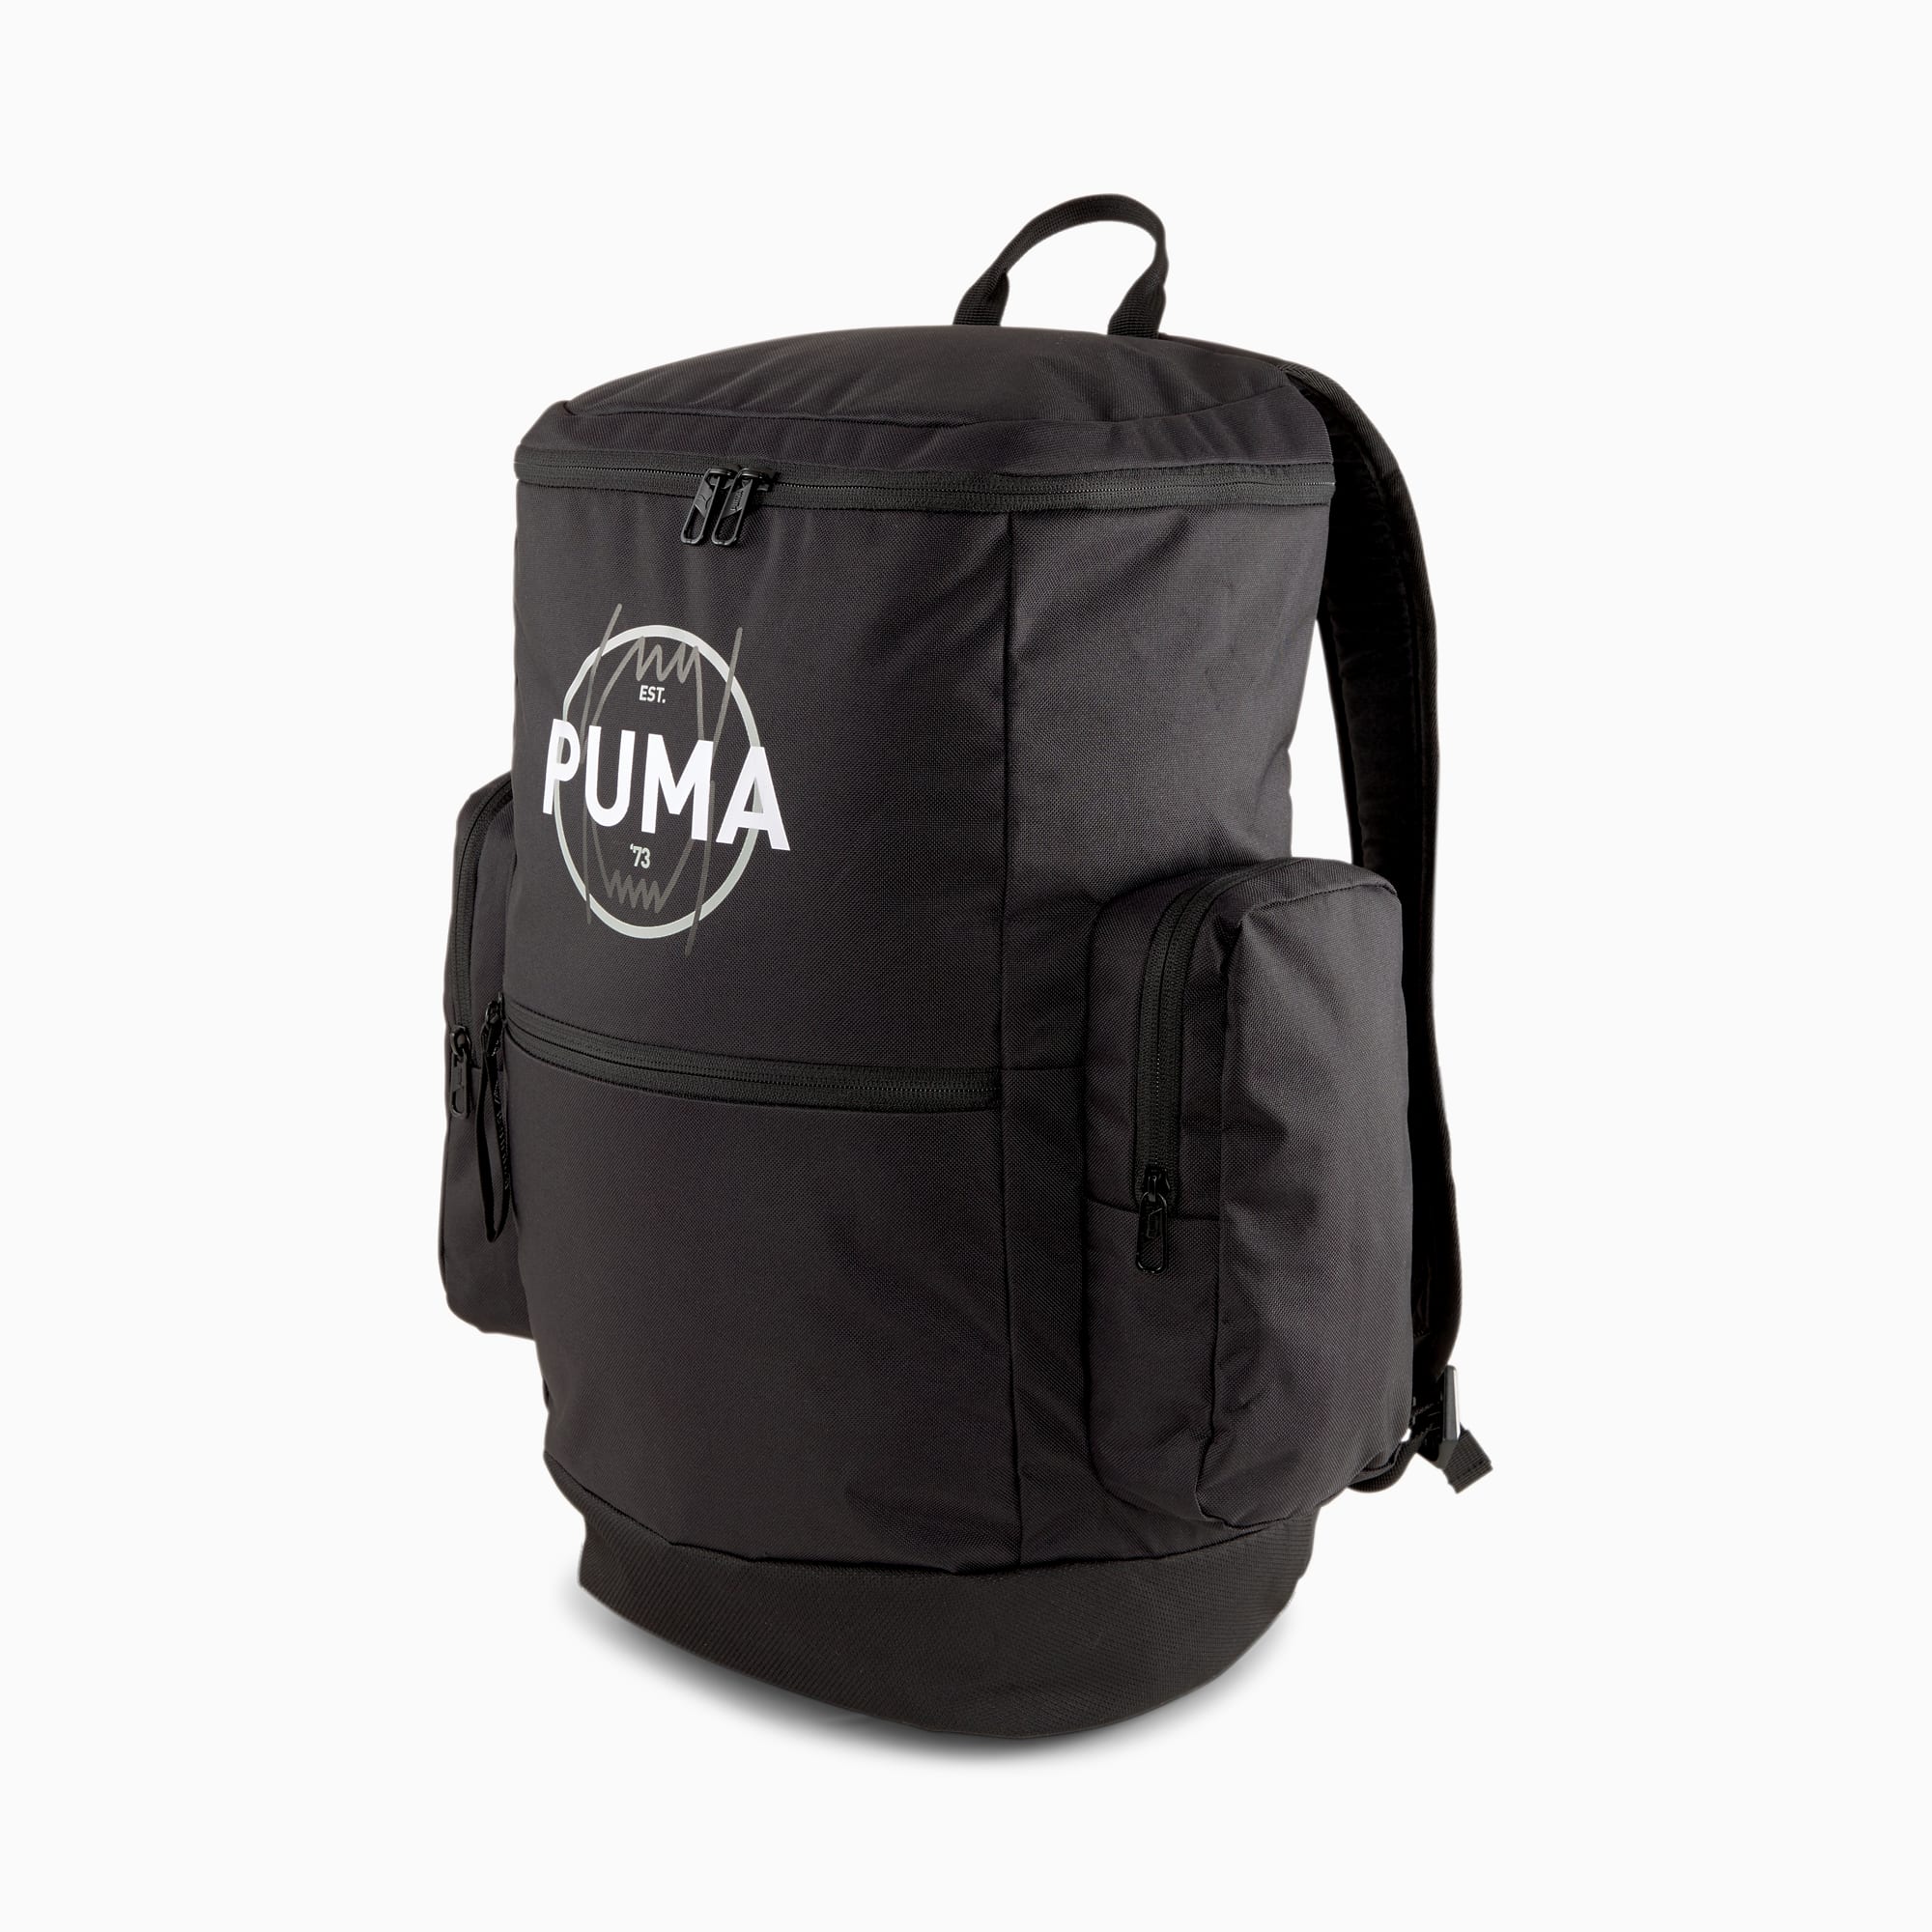 Puma公式 バスケットボール バックパック リュック メンズ Puma Black プーマ Shoes プーマ